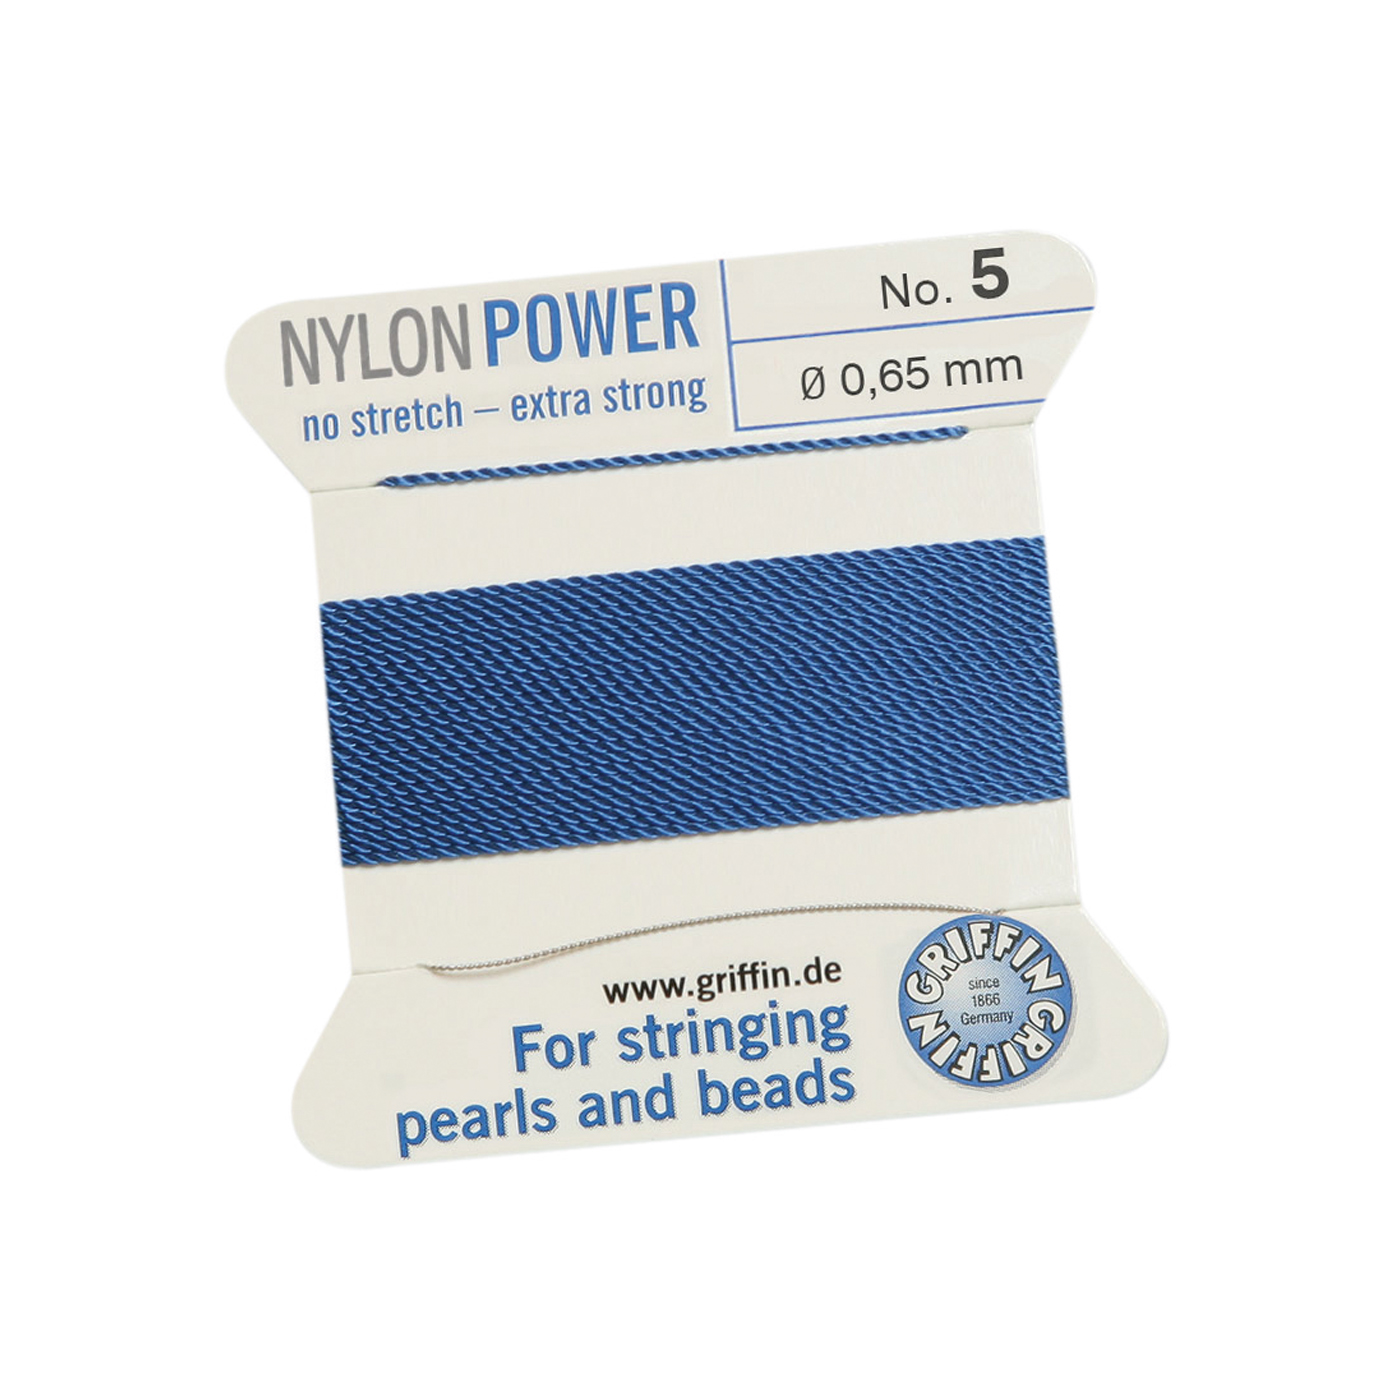 Bead Cord NylonPower, Blue, No. 5 - 2 m